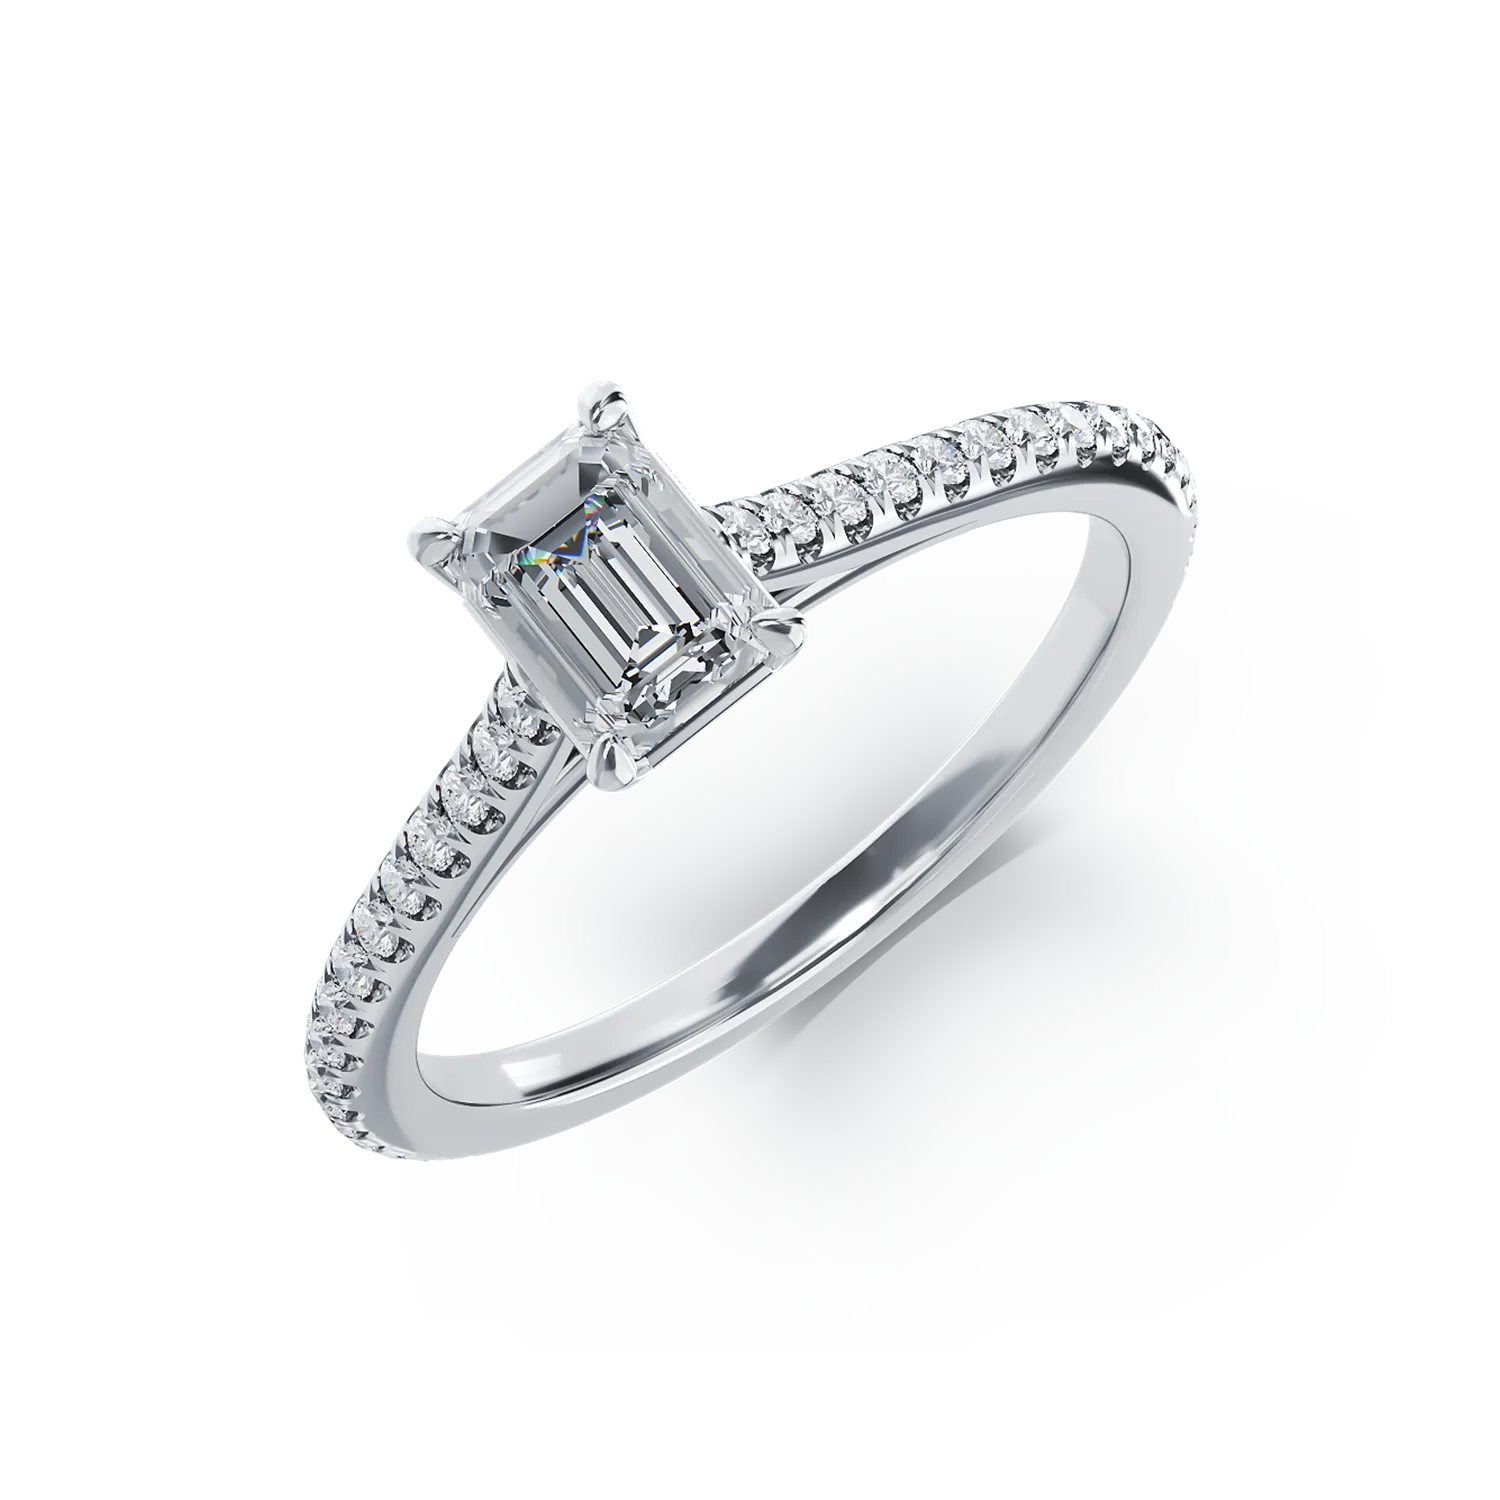 Diamond platinum engagement ring with 0.6ct diamond and 0.185ct diamonds